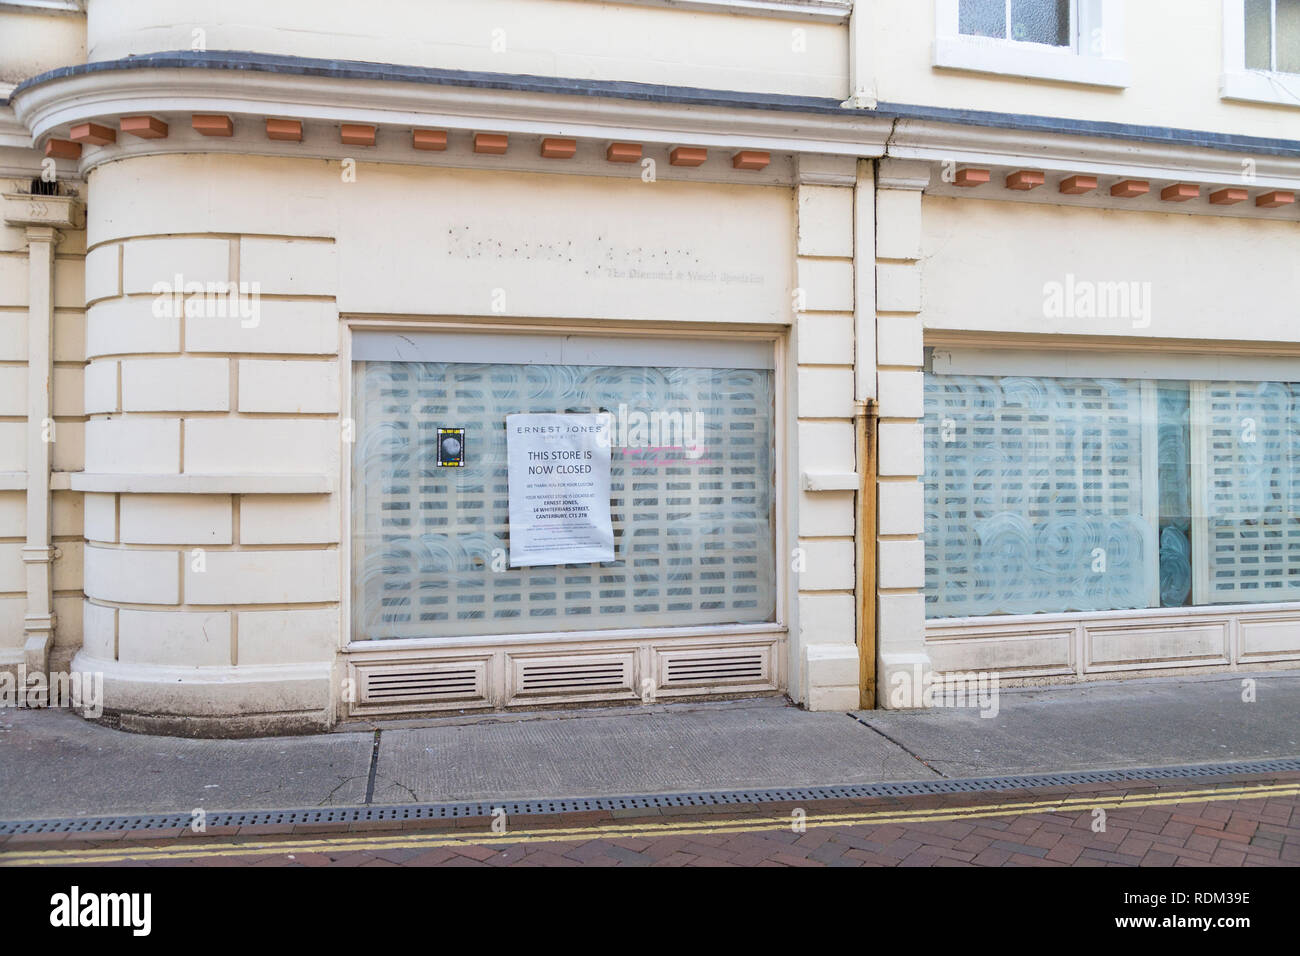 Ernest jones closed down store shop, ashford, kent, uk Stock Photo